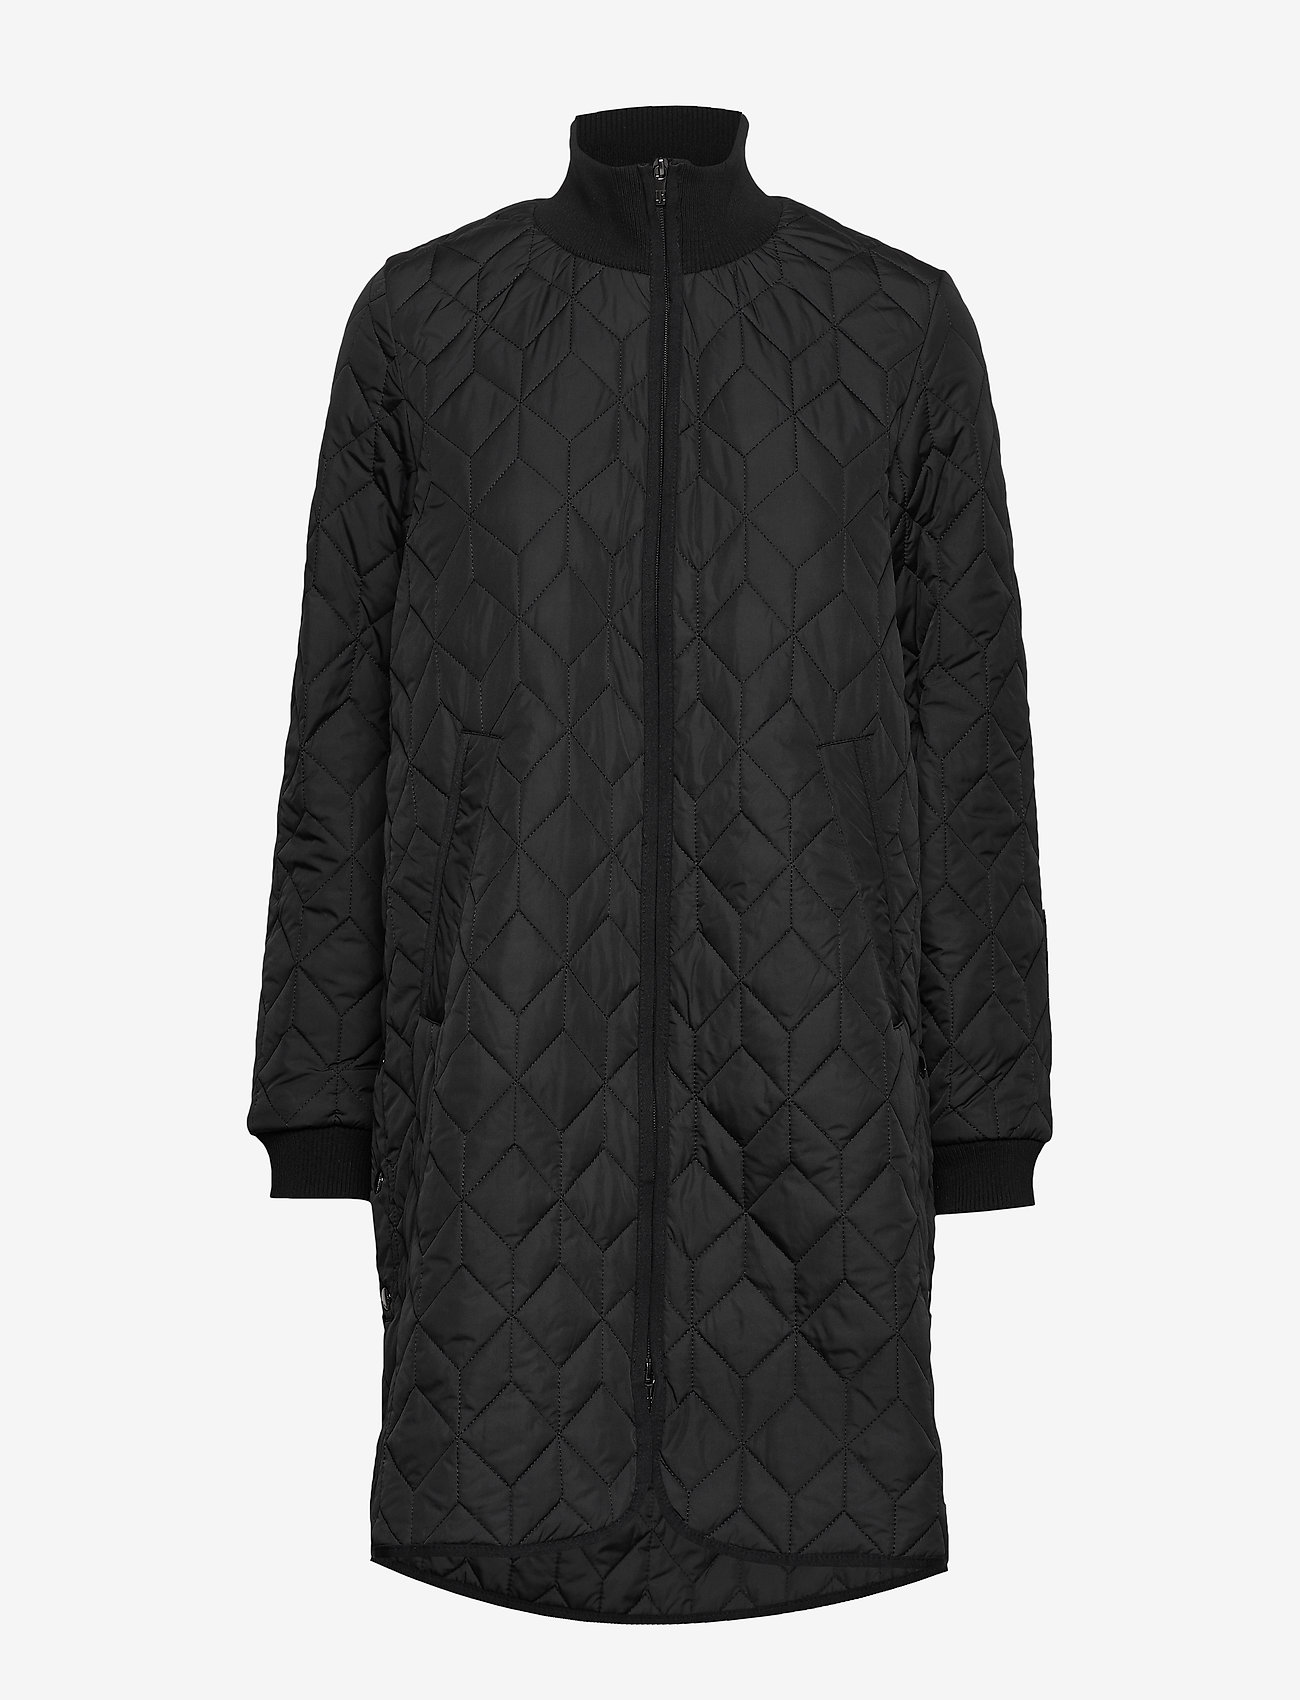 Ilse Jacobsen - Outdoor coat - kevättakit - black - 1